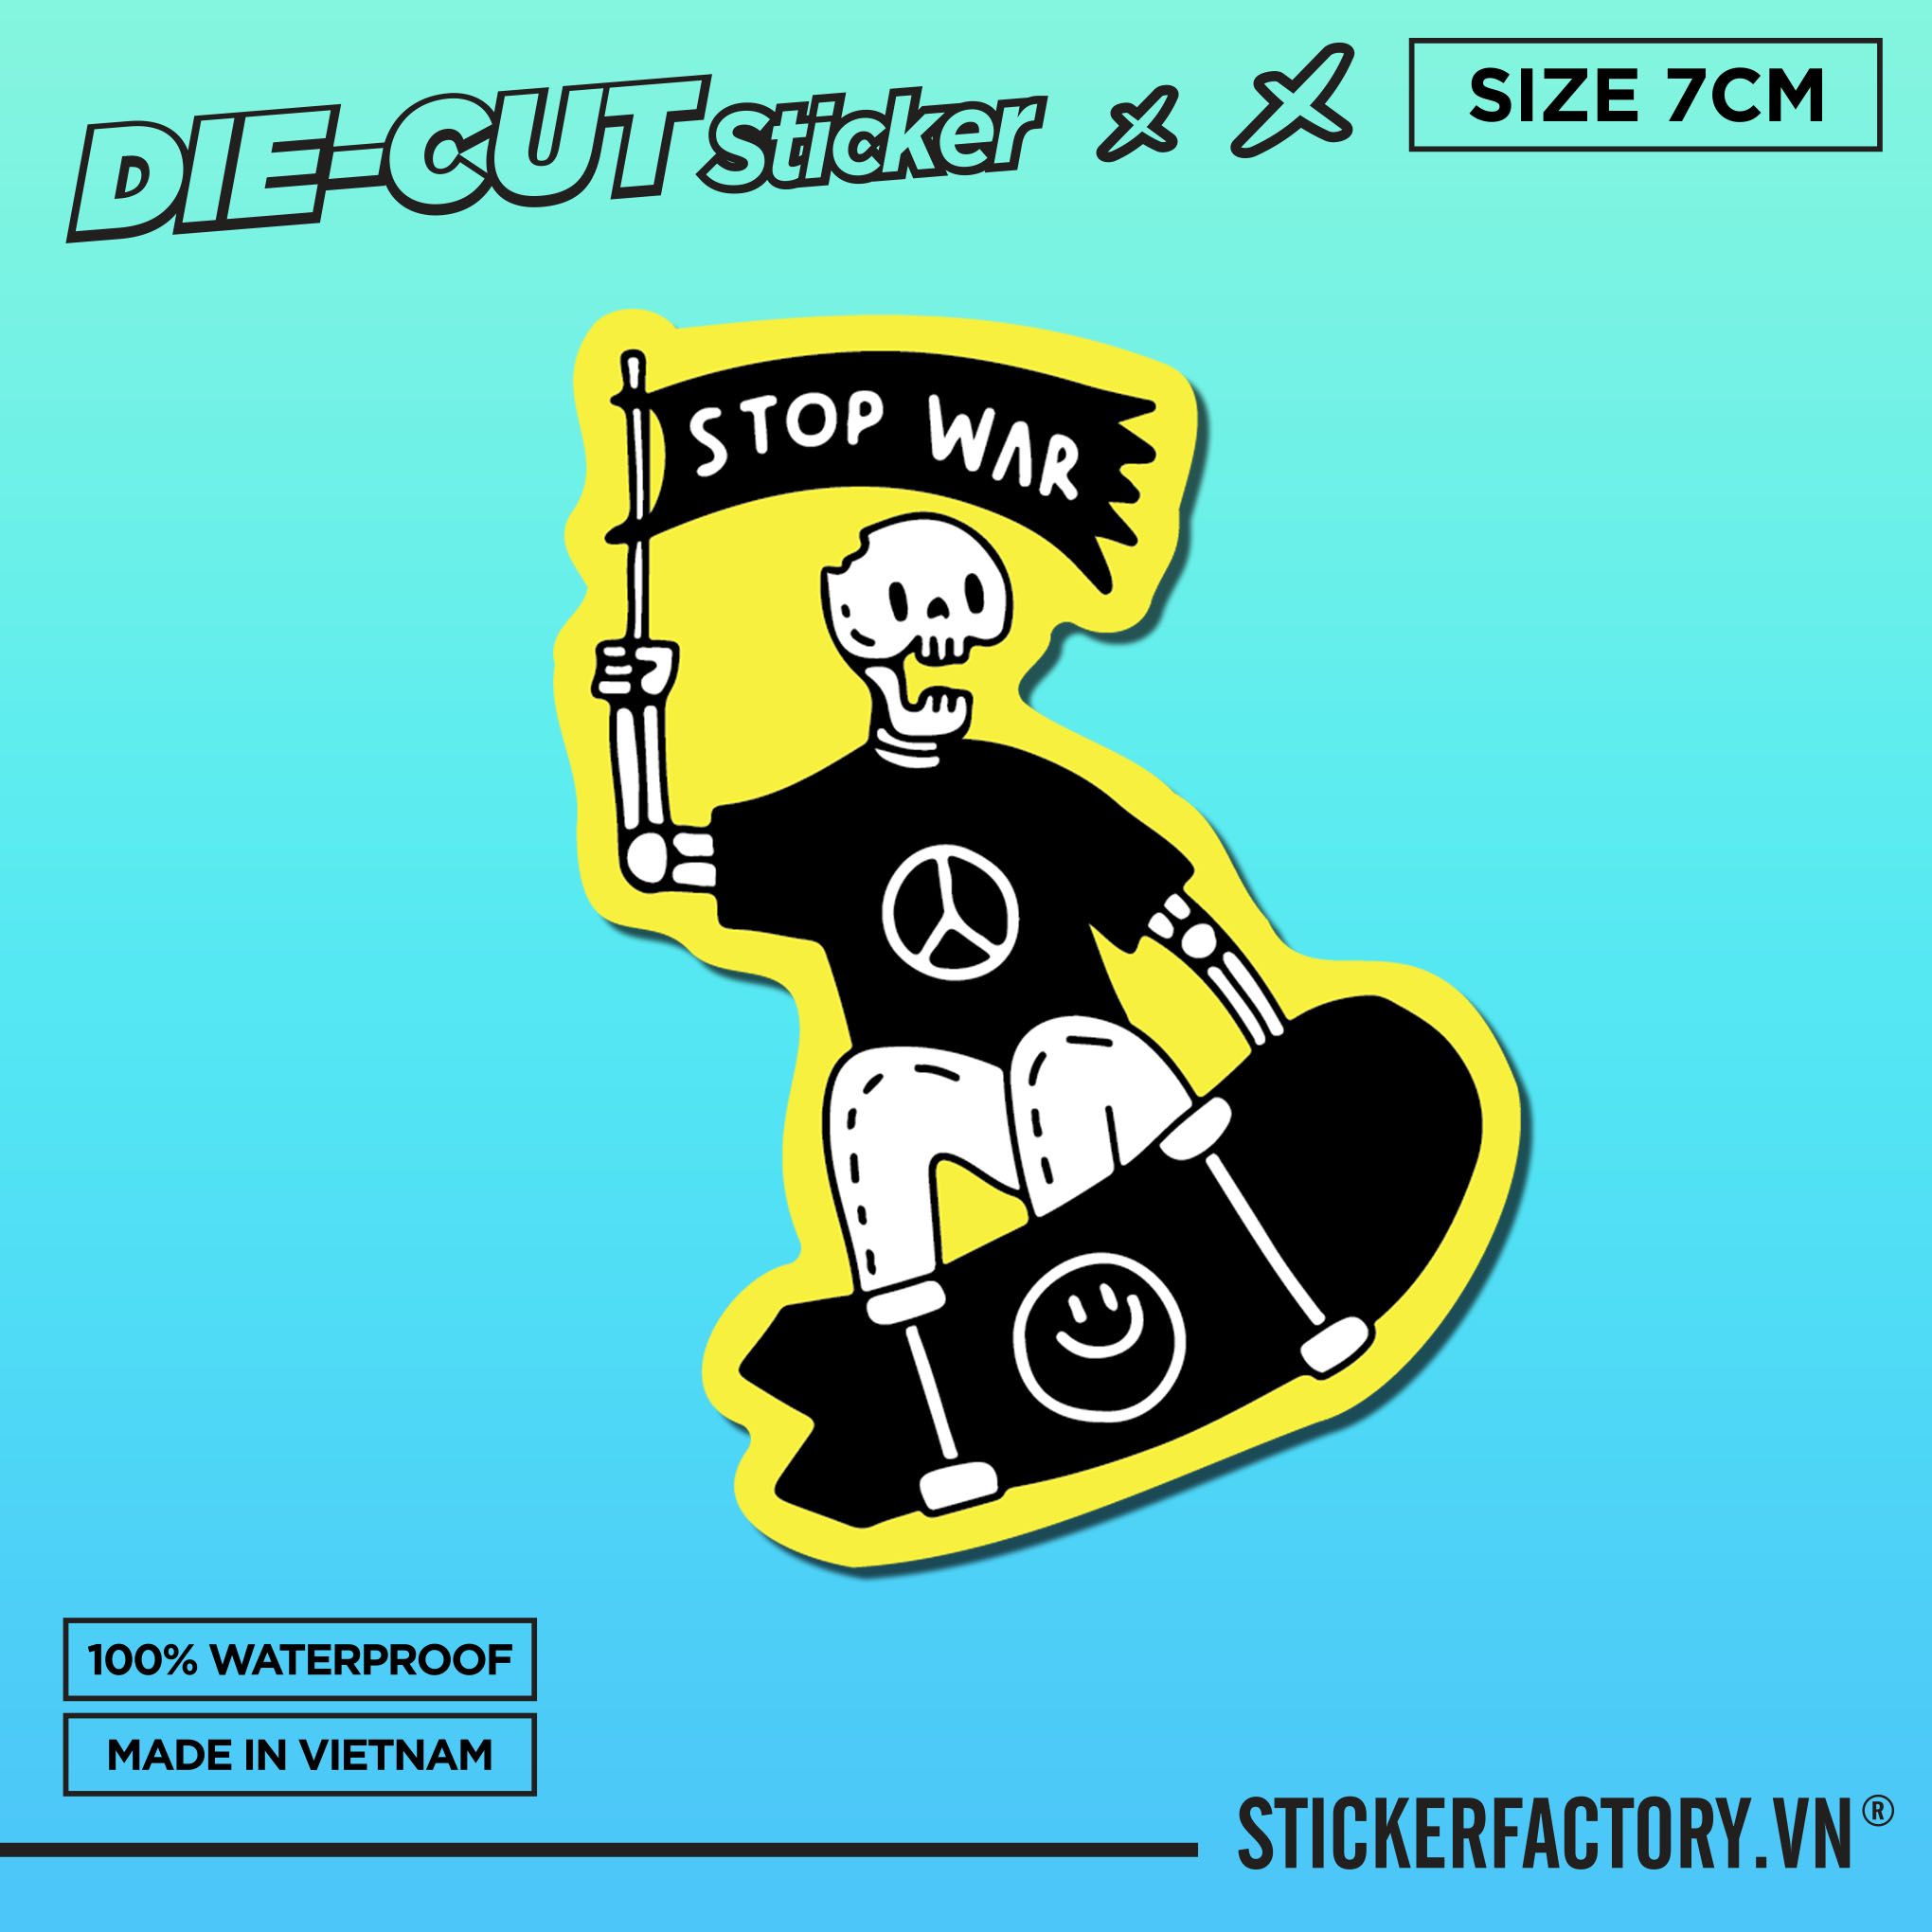 STOP WAR SKELETON 7cm - Sticker Die-cut hình dán cắt rời